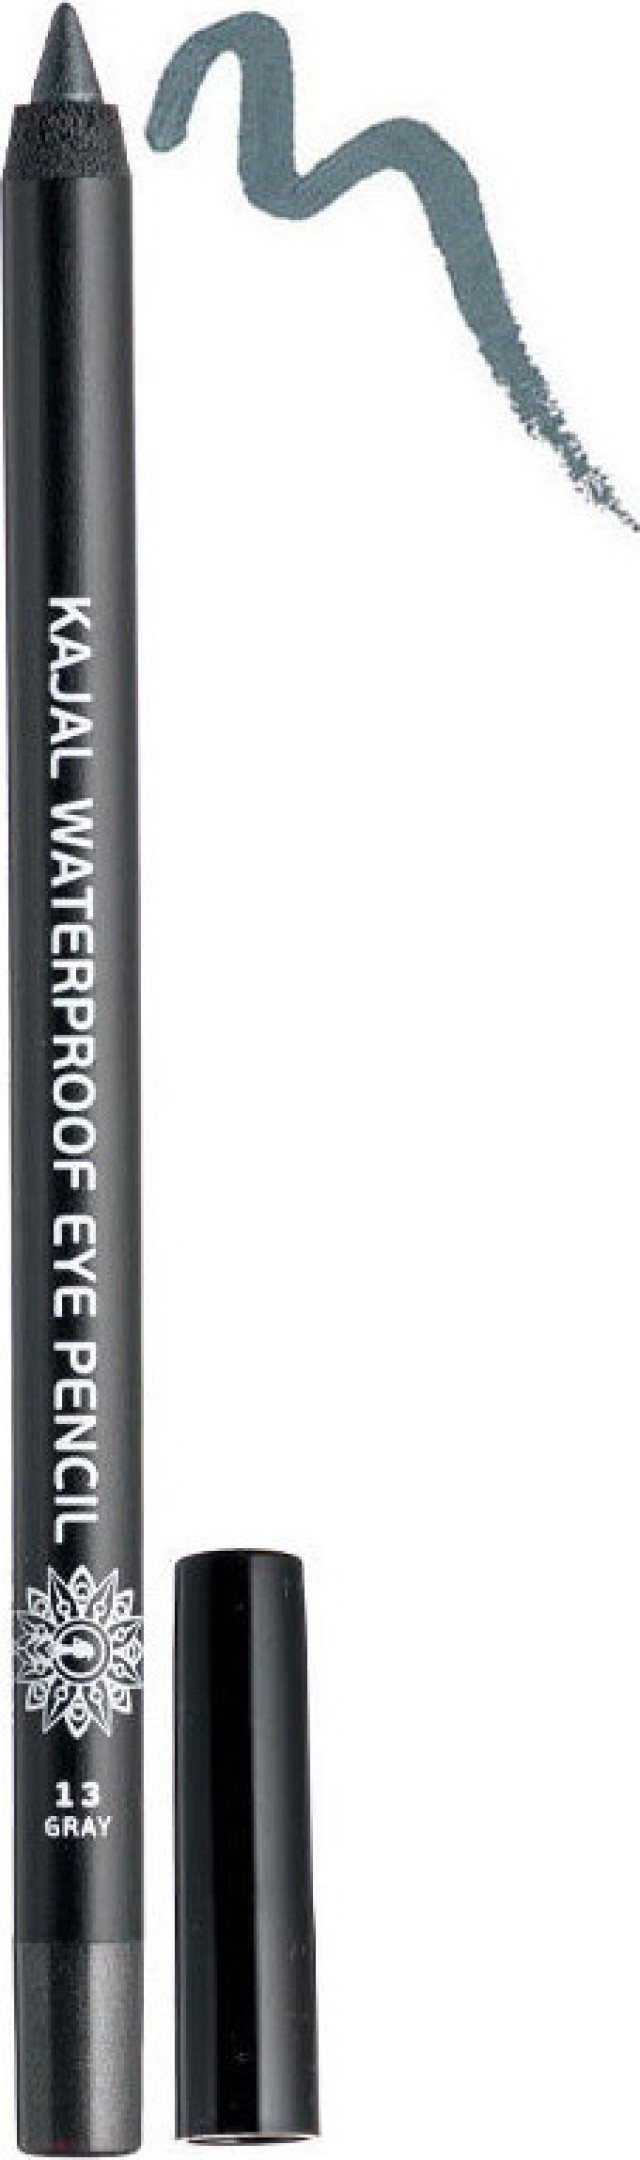 GARDEN Kajal Waterproof Eye Pencil 13 Gray, Αδιάβροχο Μολύβι Ματιών 1.4g